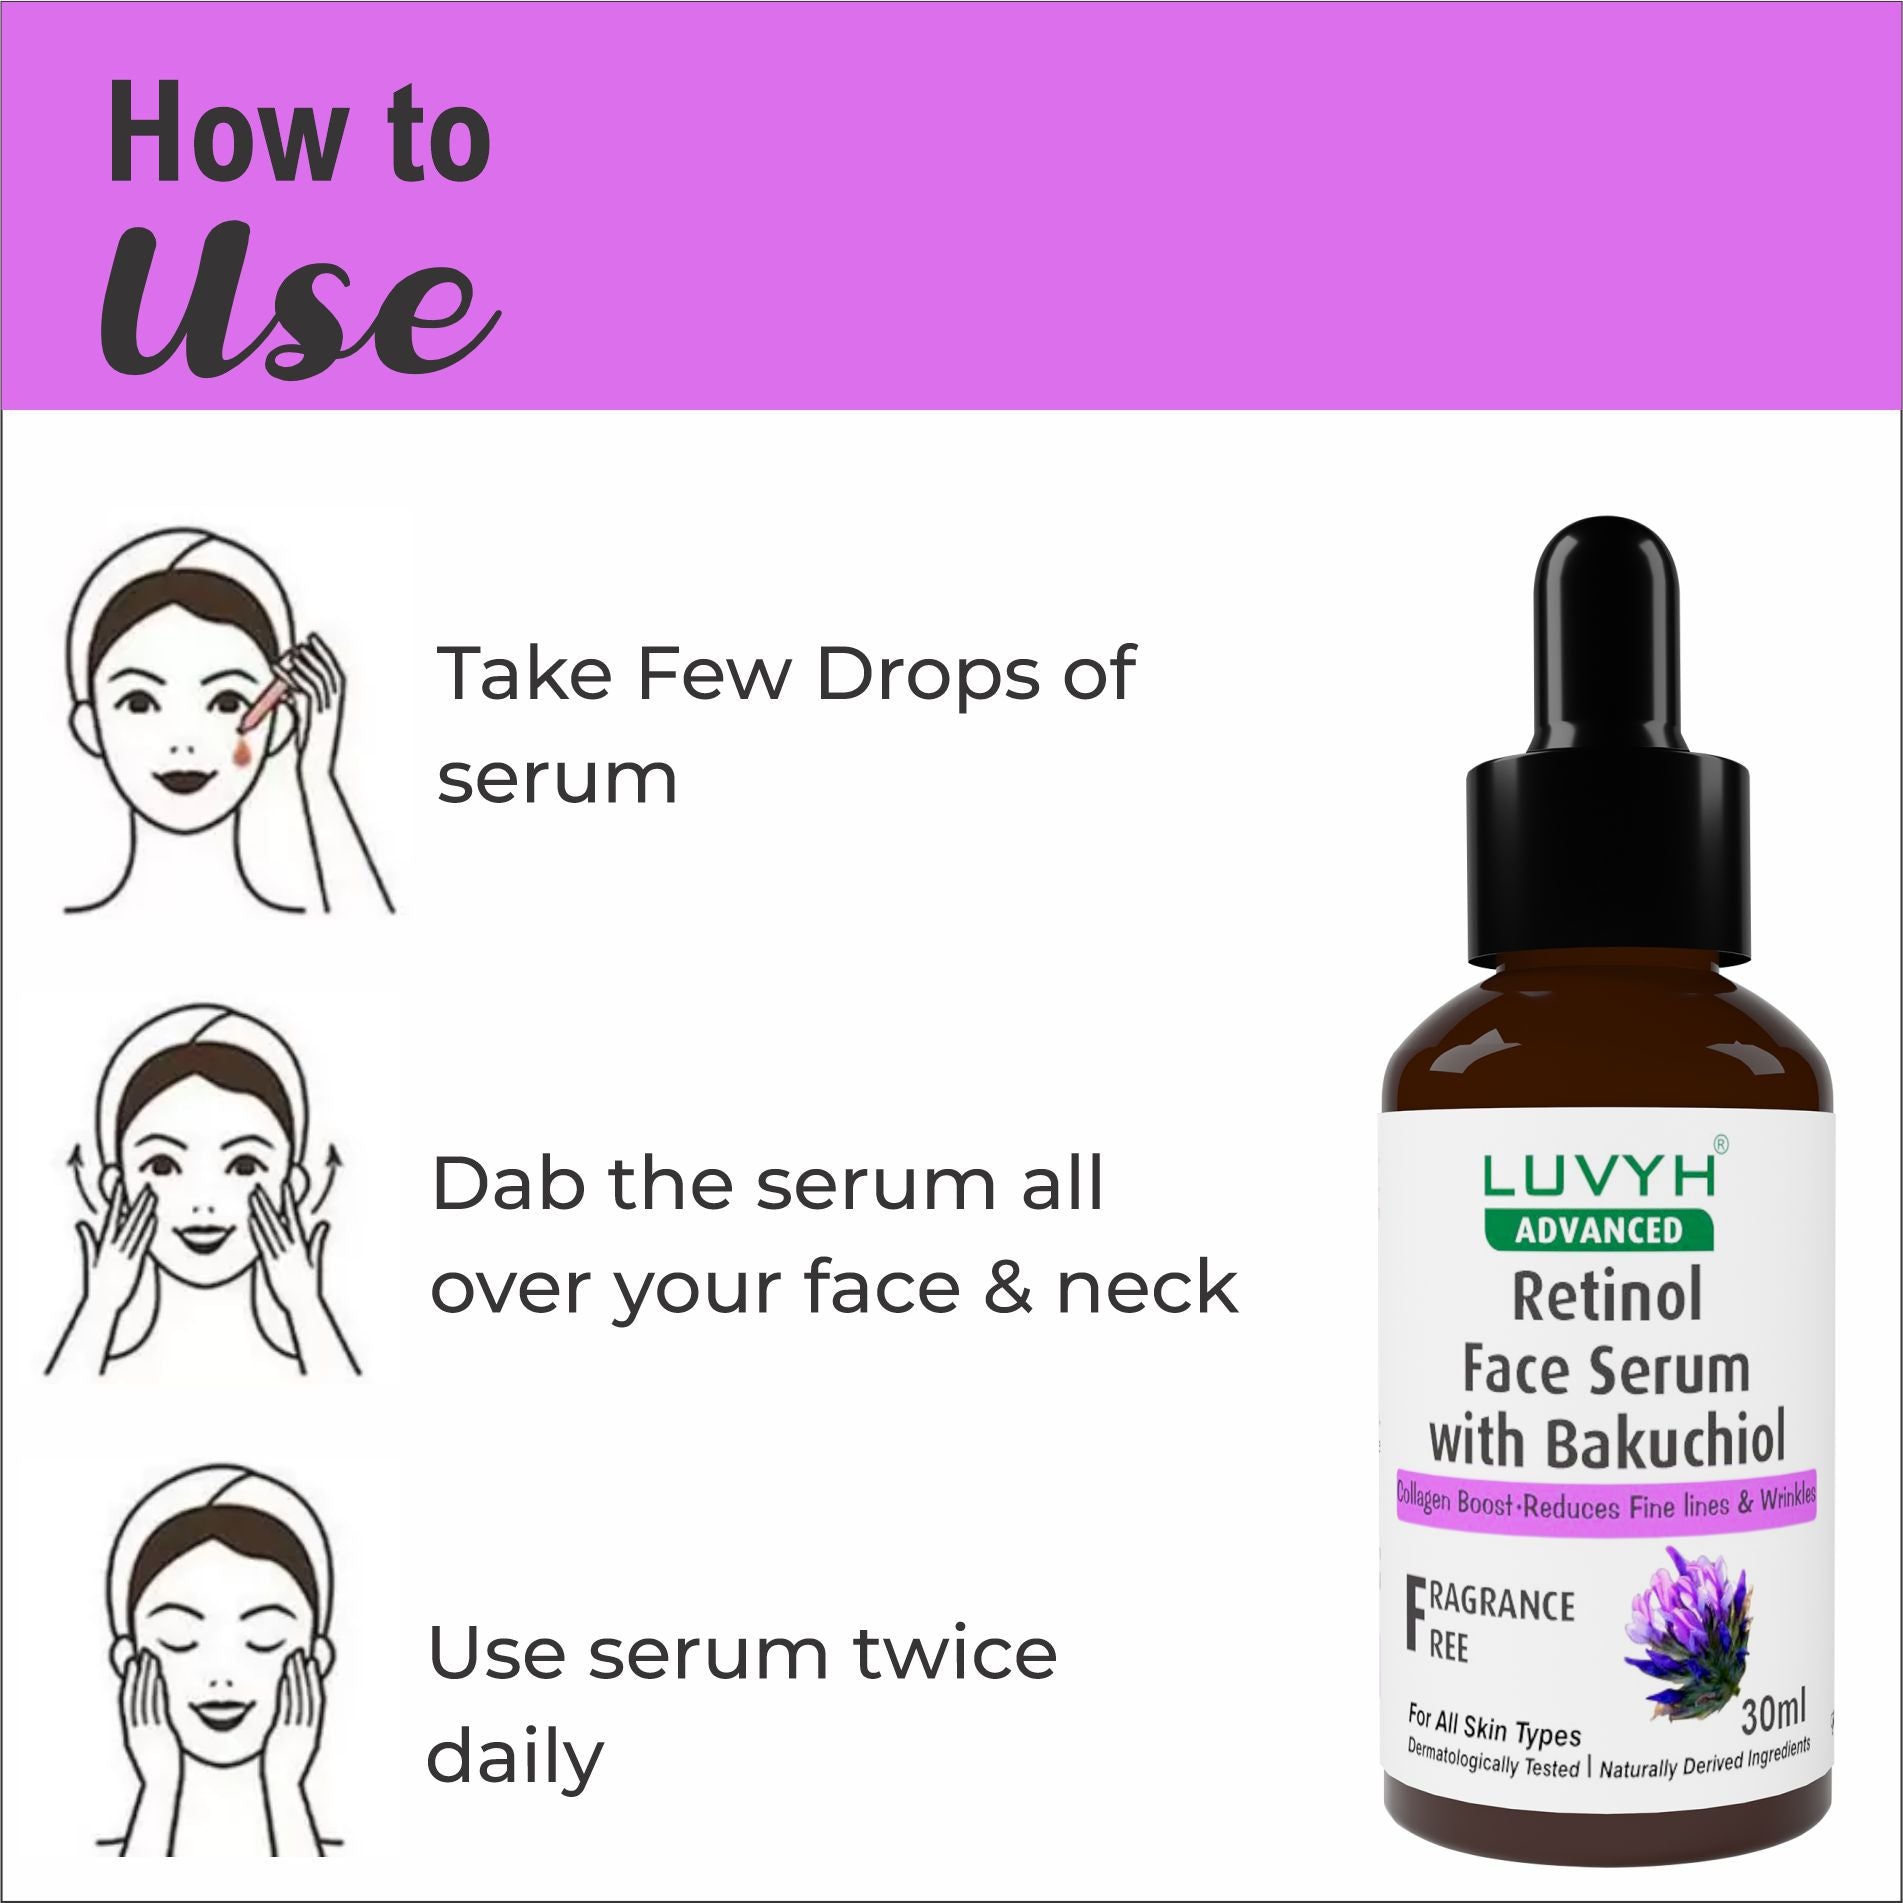 How to Use - Retinol Face Serum with Bakuchiol 